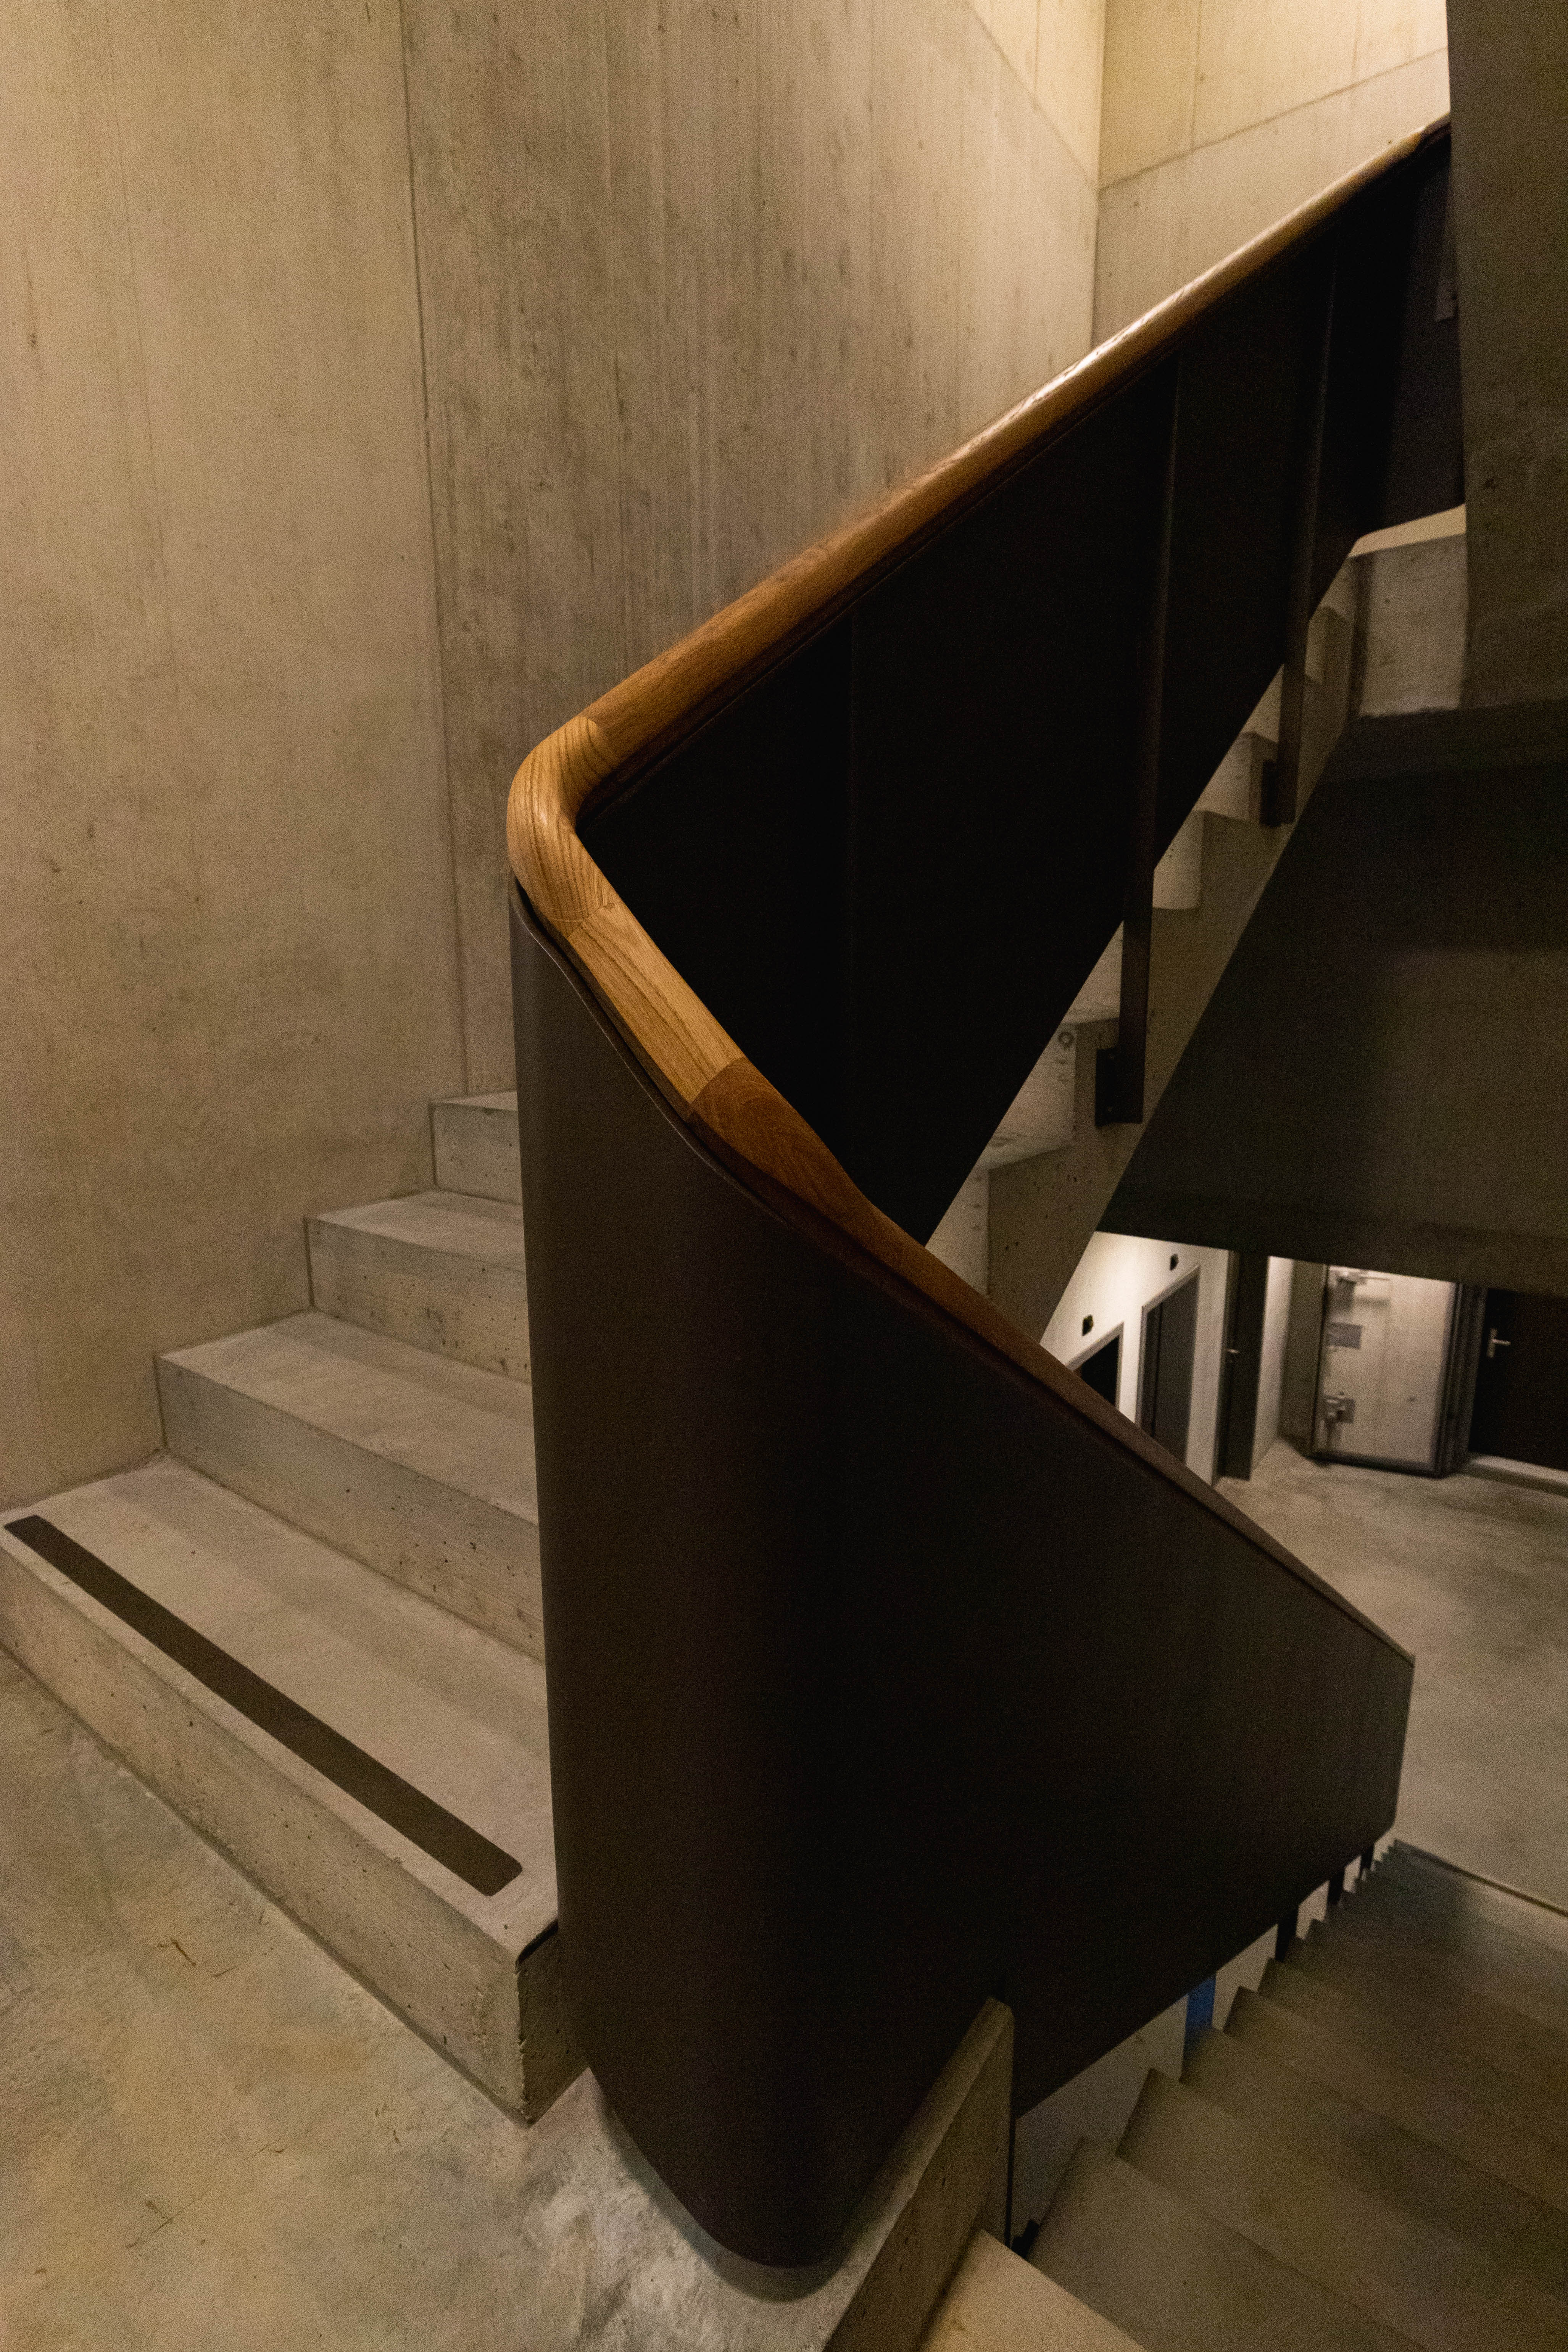 Stair Image 1312